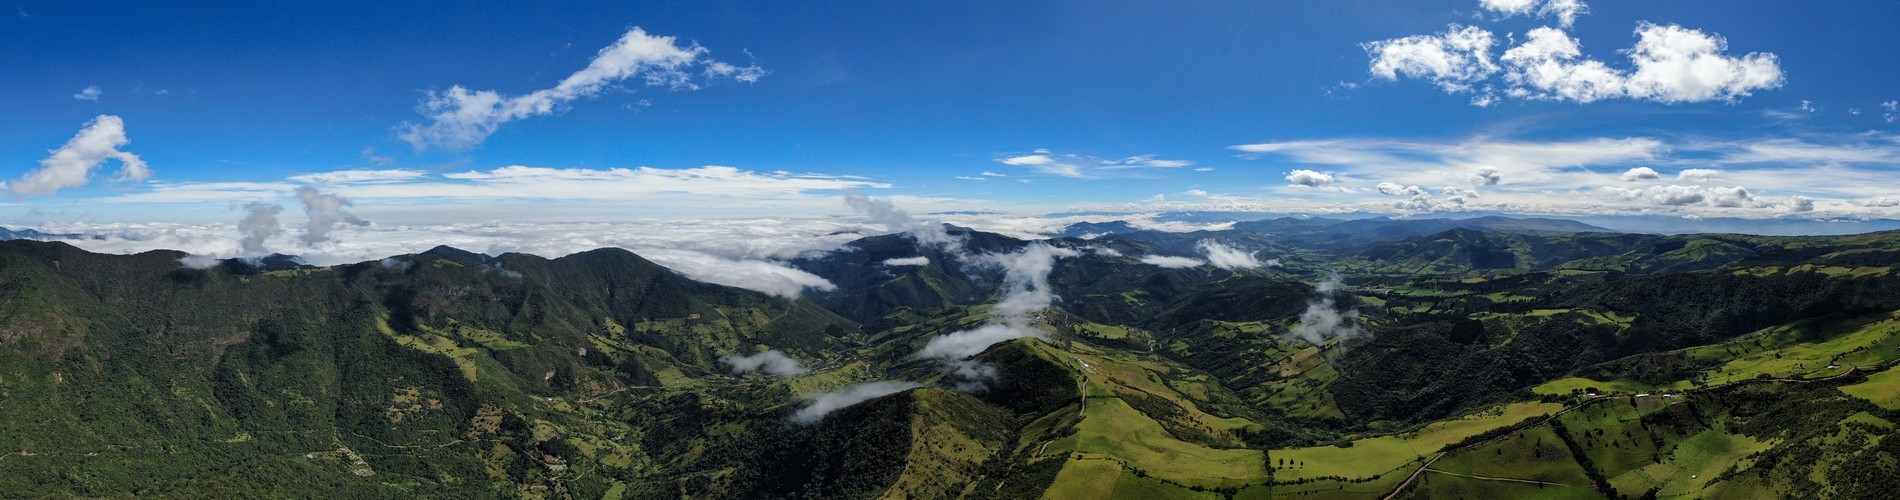 ECUADORIAN HIGHLANDS: THE BEAUTIFUL ENERGY OF ITS PEOPLE